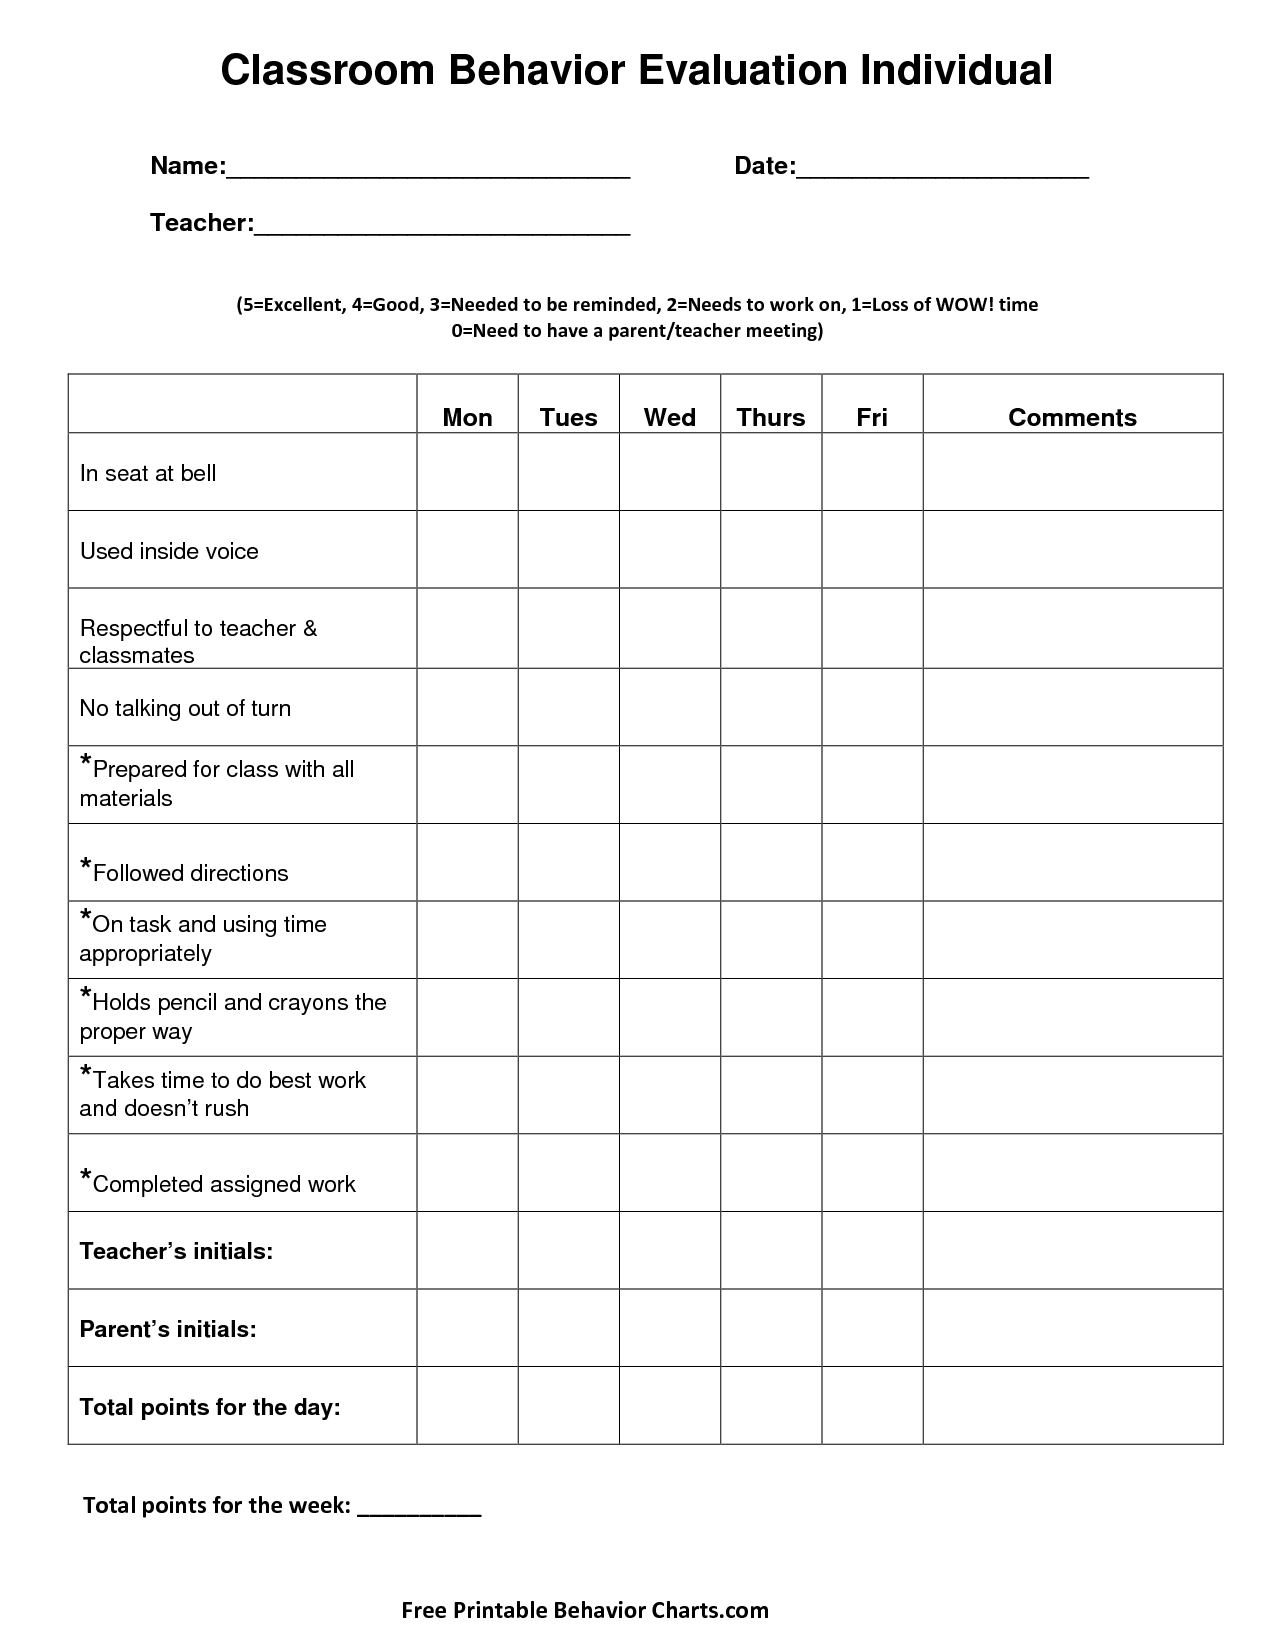 Free Printable Classroom Behavior Charts | Behavioral Charts - Free Printable Behavior Charts For Elementary Students